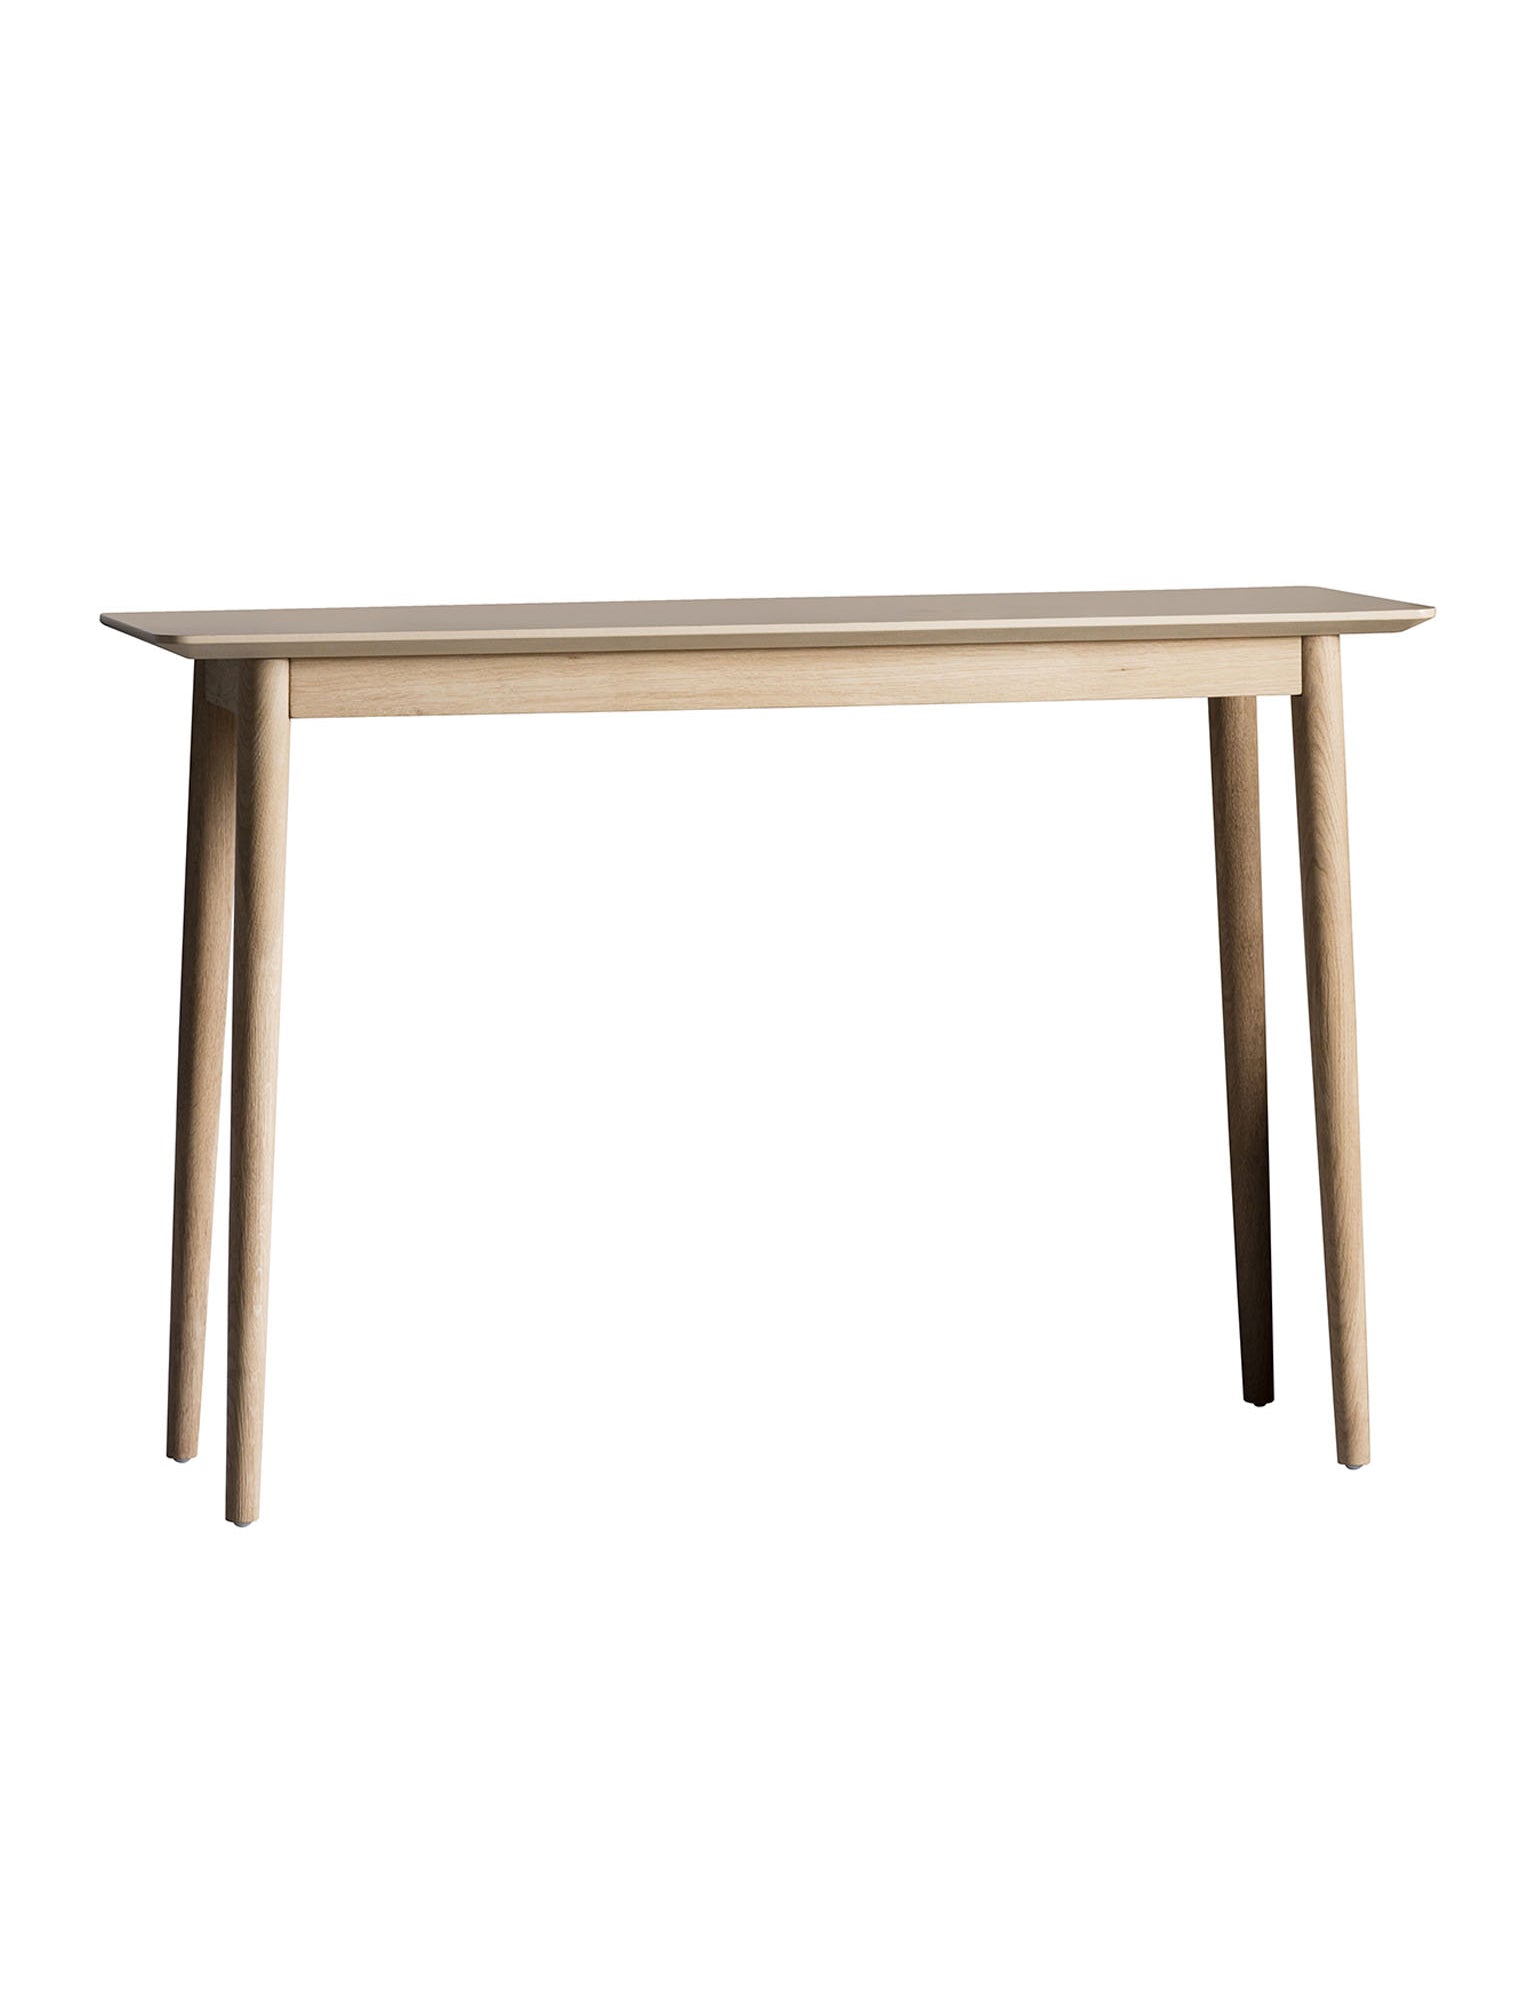 European oak console table with chevron design